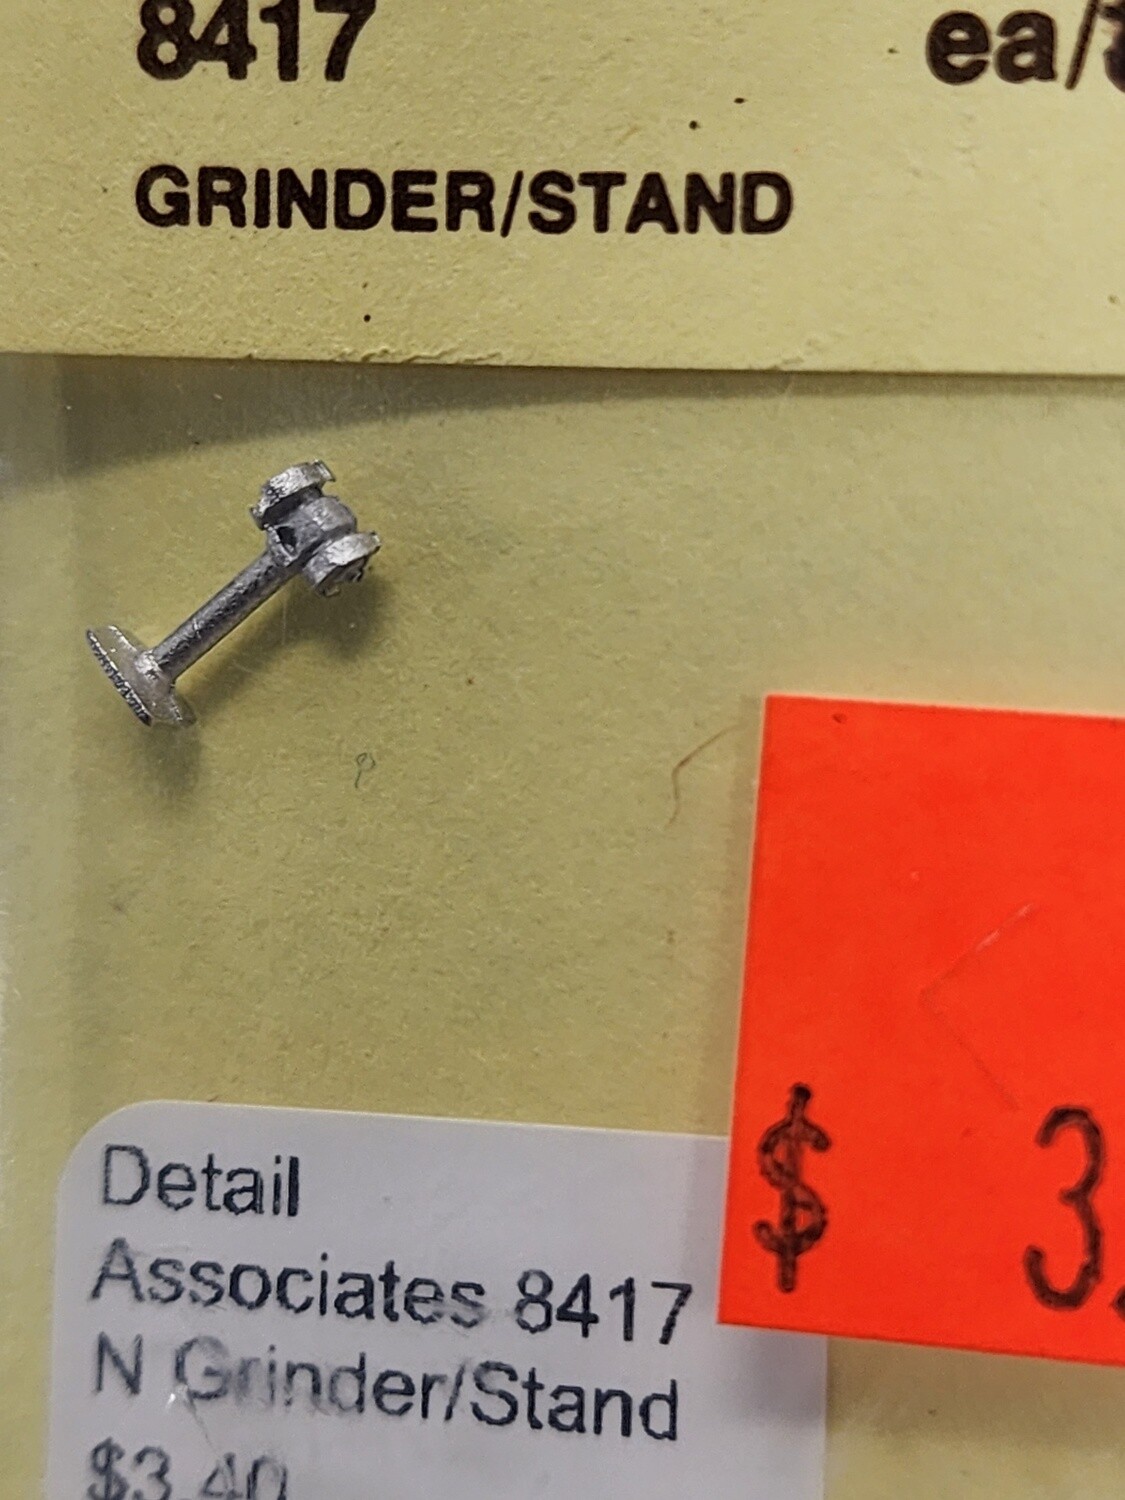 Detail Associates 8417 N Grinder/Stand